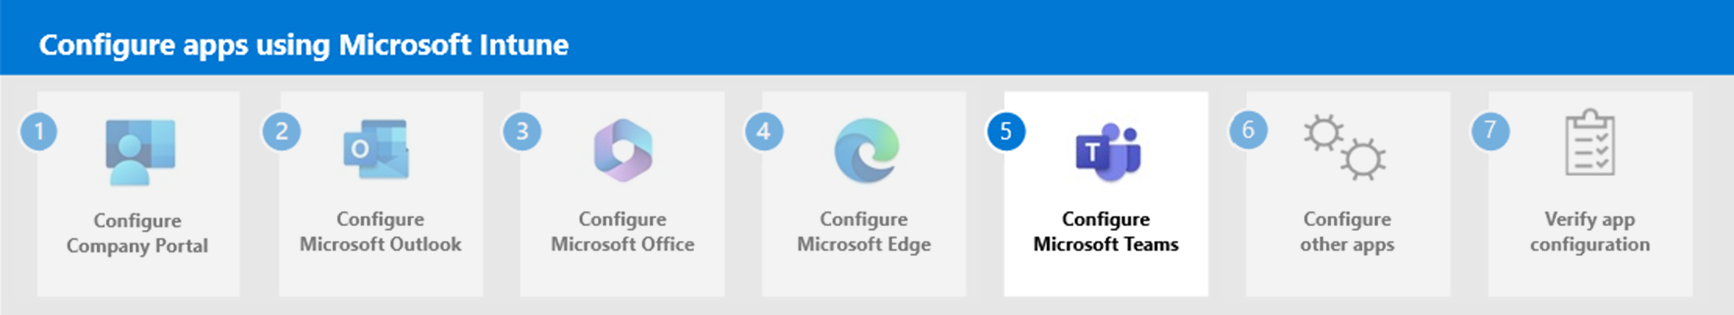 Step 5 - Configure Microsoft Teams